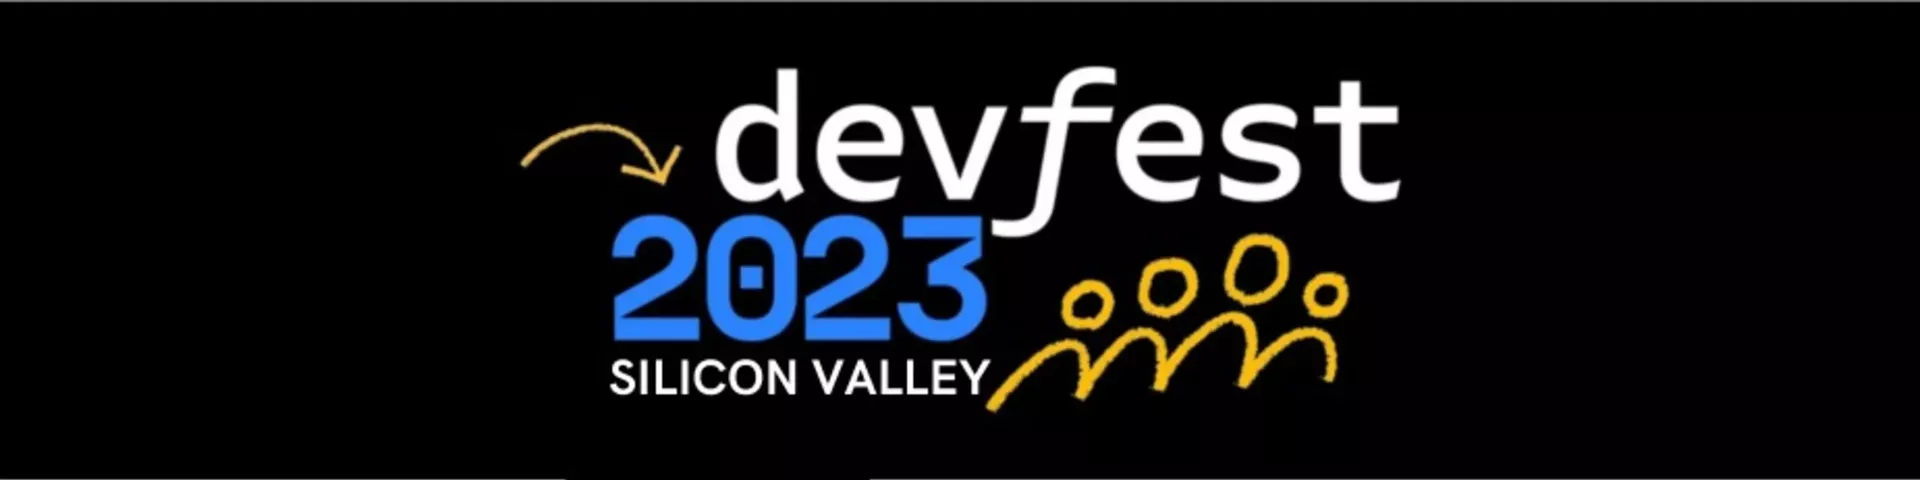 Banner - DevFest Silicon Valley 2023